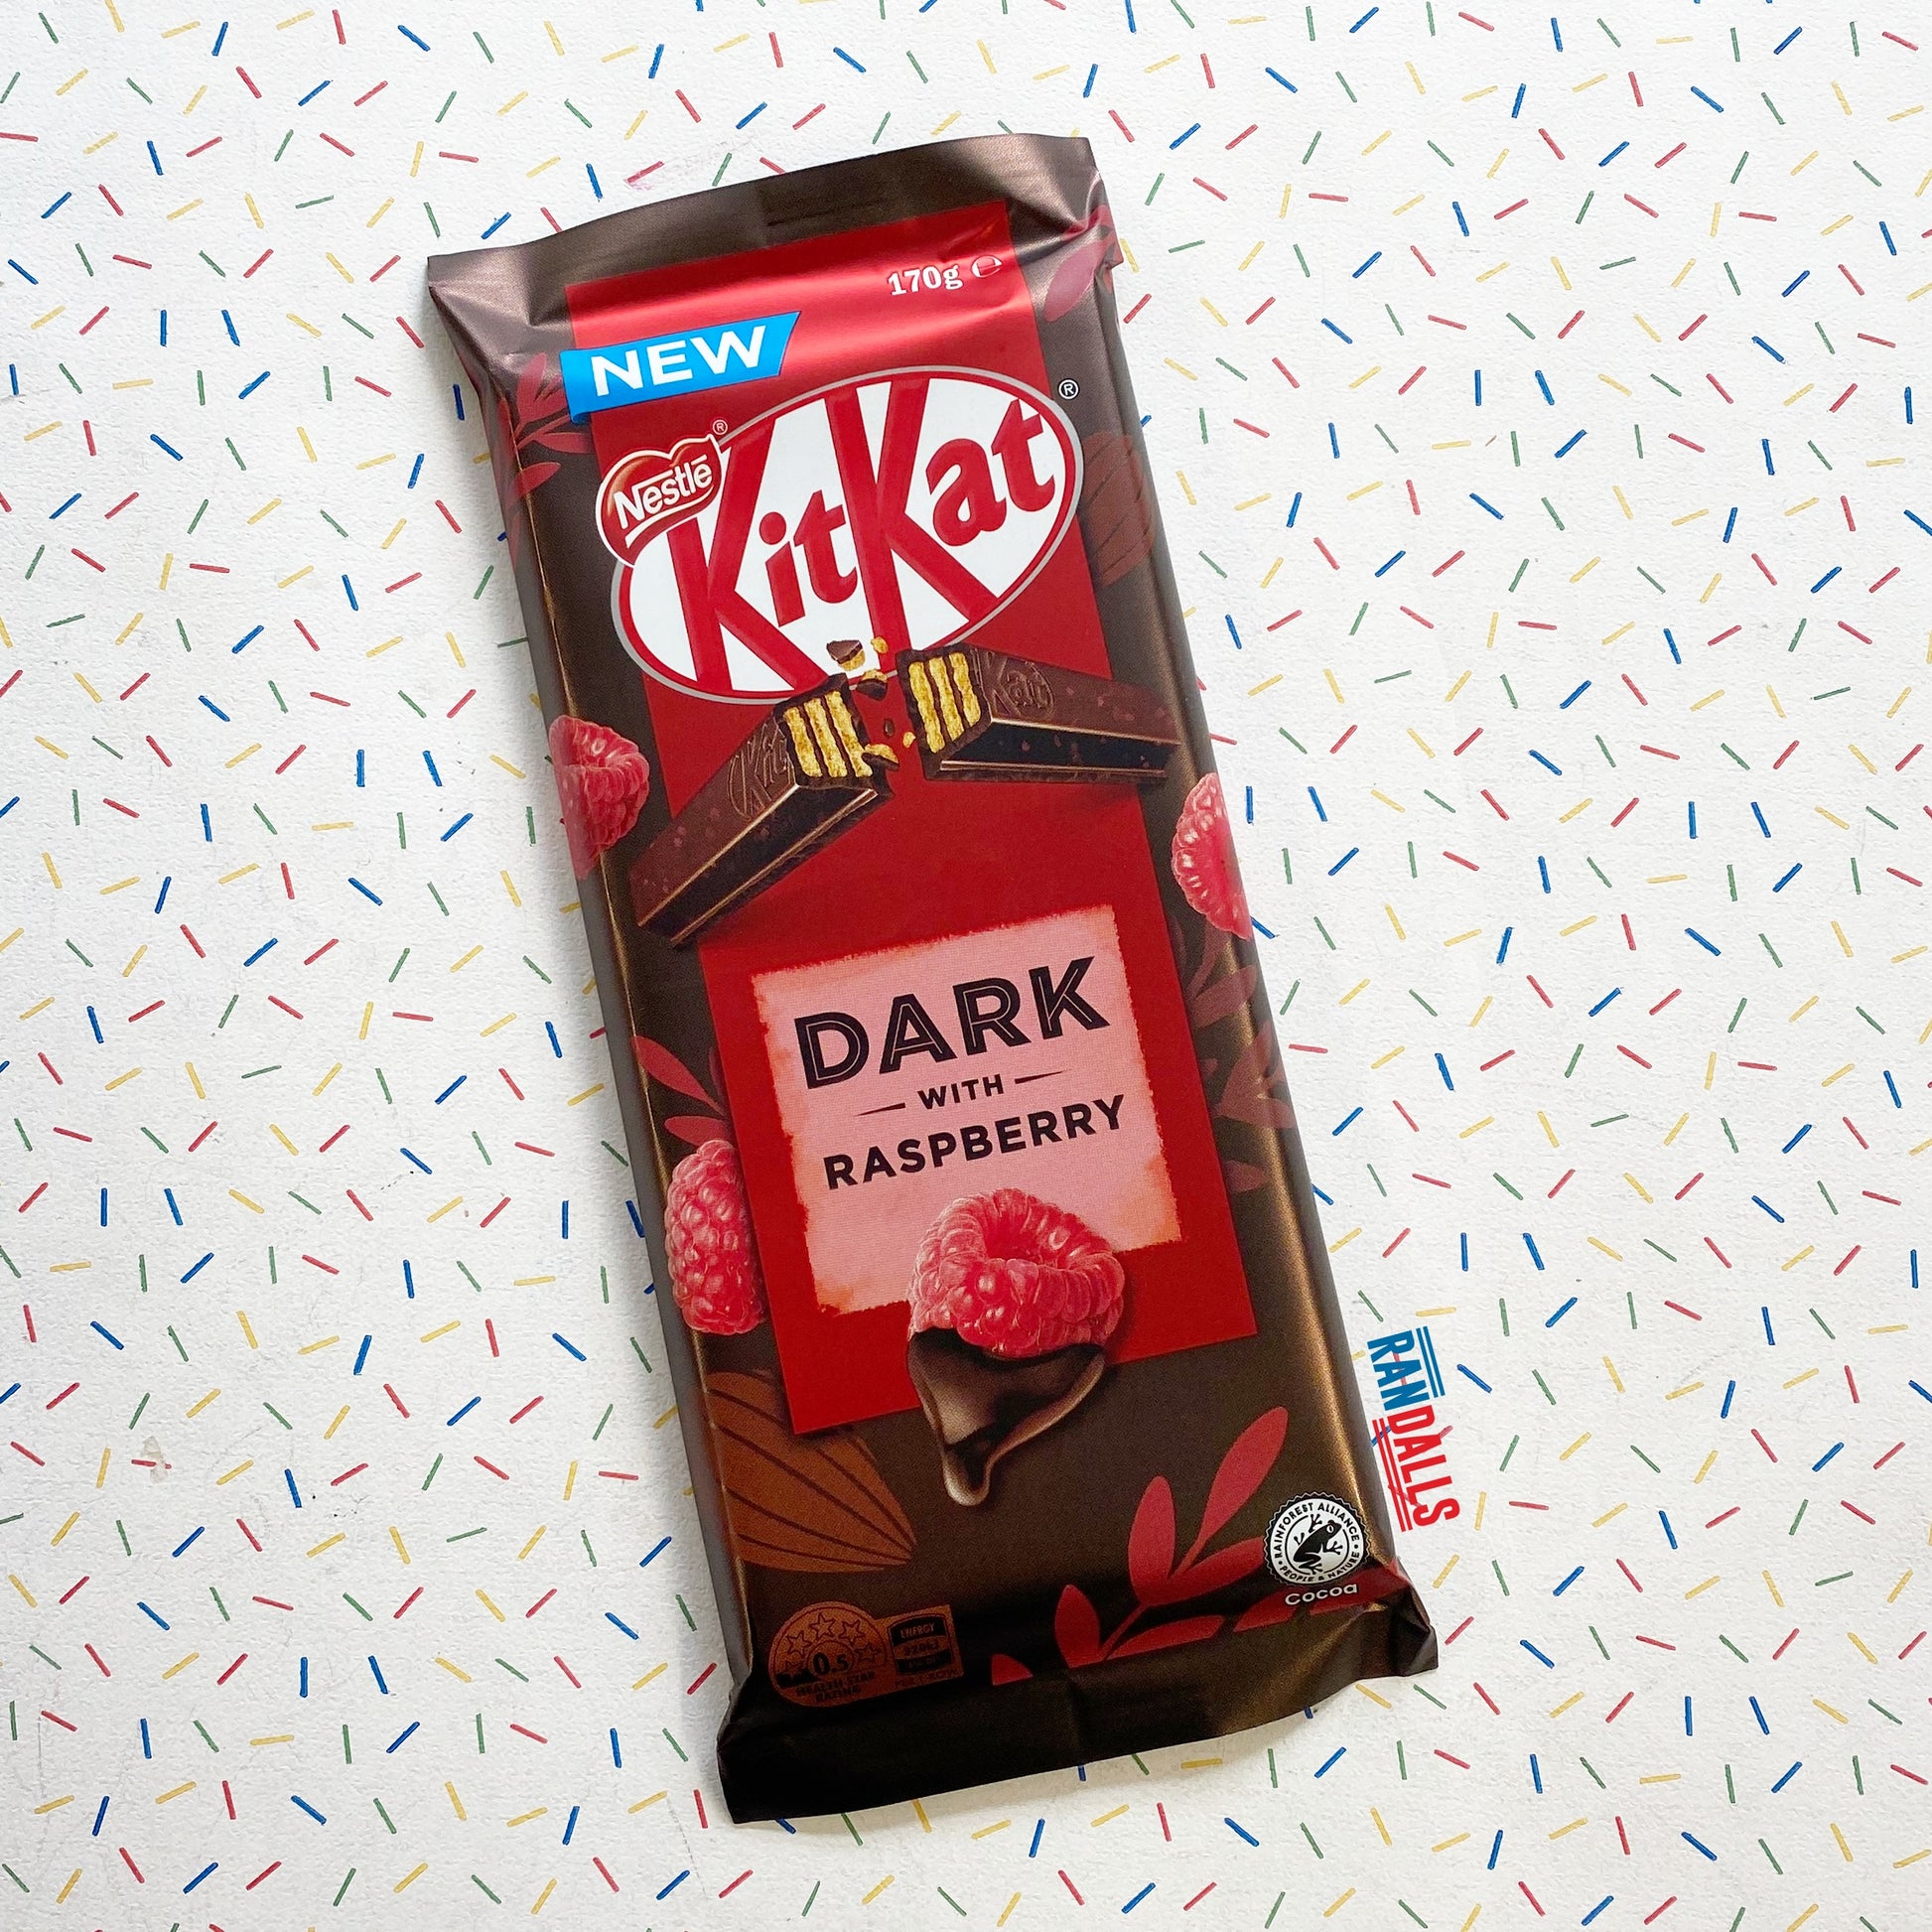 kit kat dark with raspberry, dark chocolate, crispy wafer, chocolate bar, australia, australian, randalls